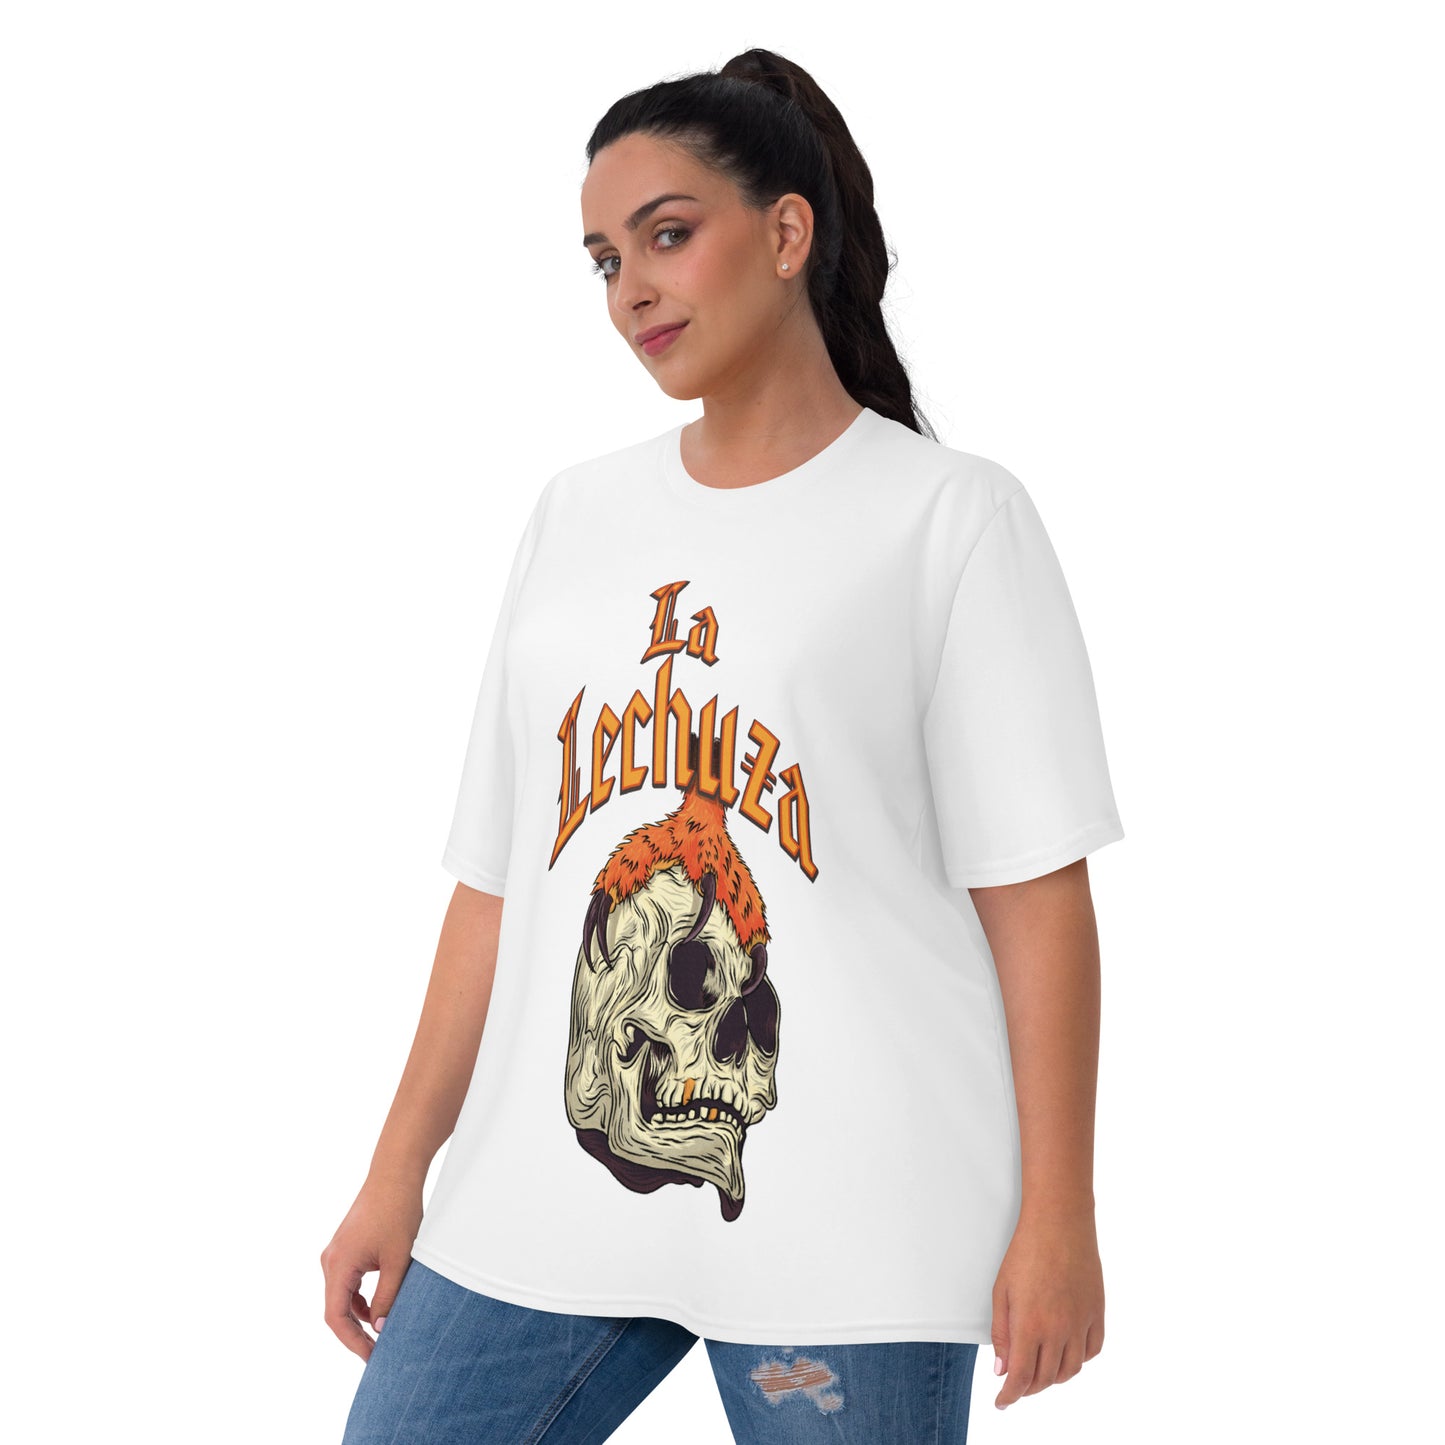 La Lechuza Women's T-shirt